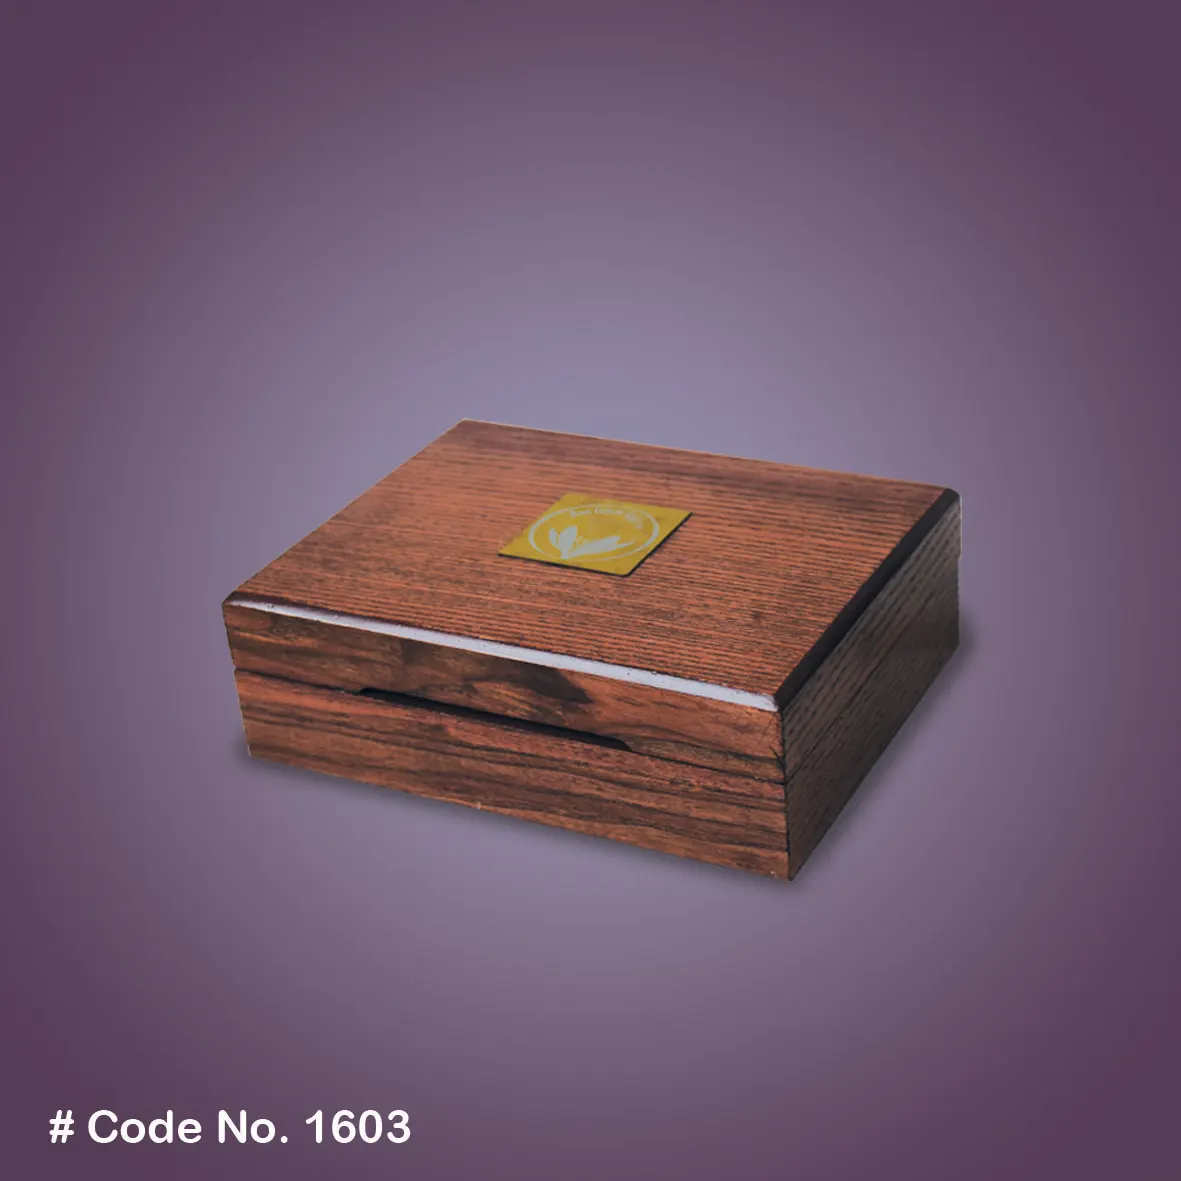 Saffron in wooden box